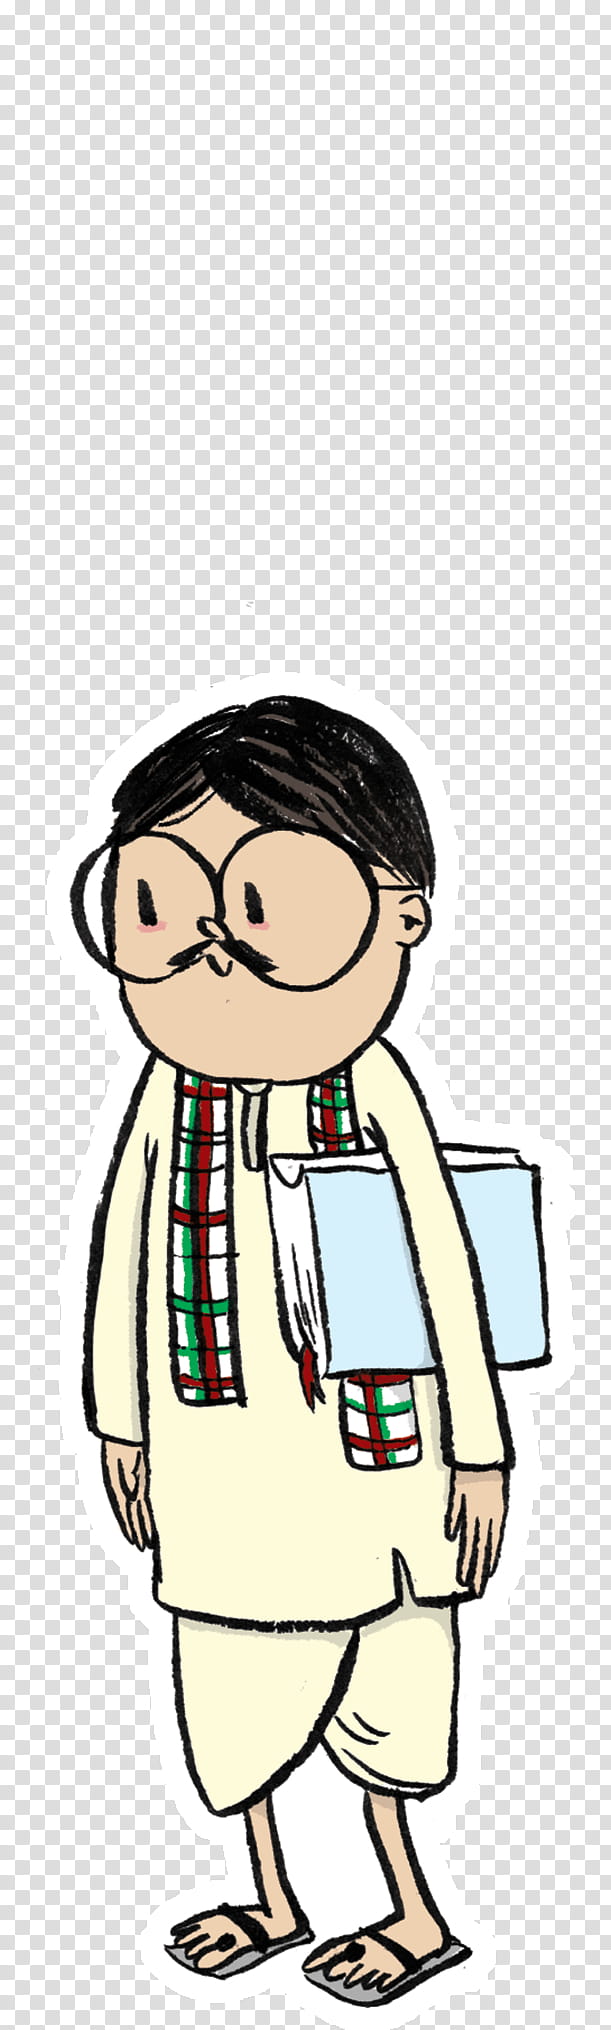 Glasses, Cartoon, Bengali Language, Drawing, Boy, Cheek, Male, Finger transparent background PNG clipart